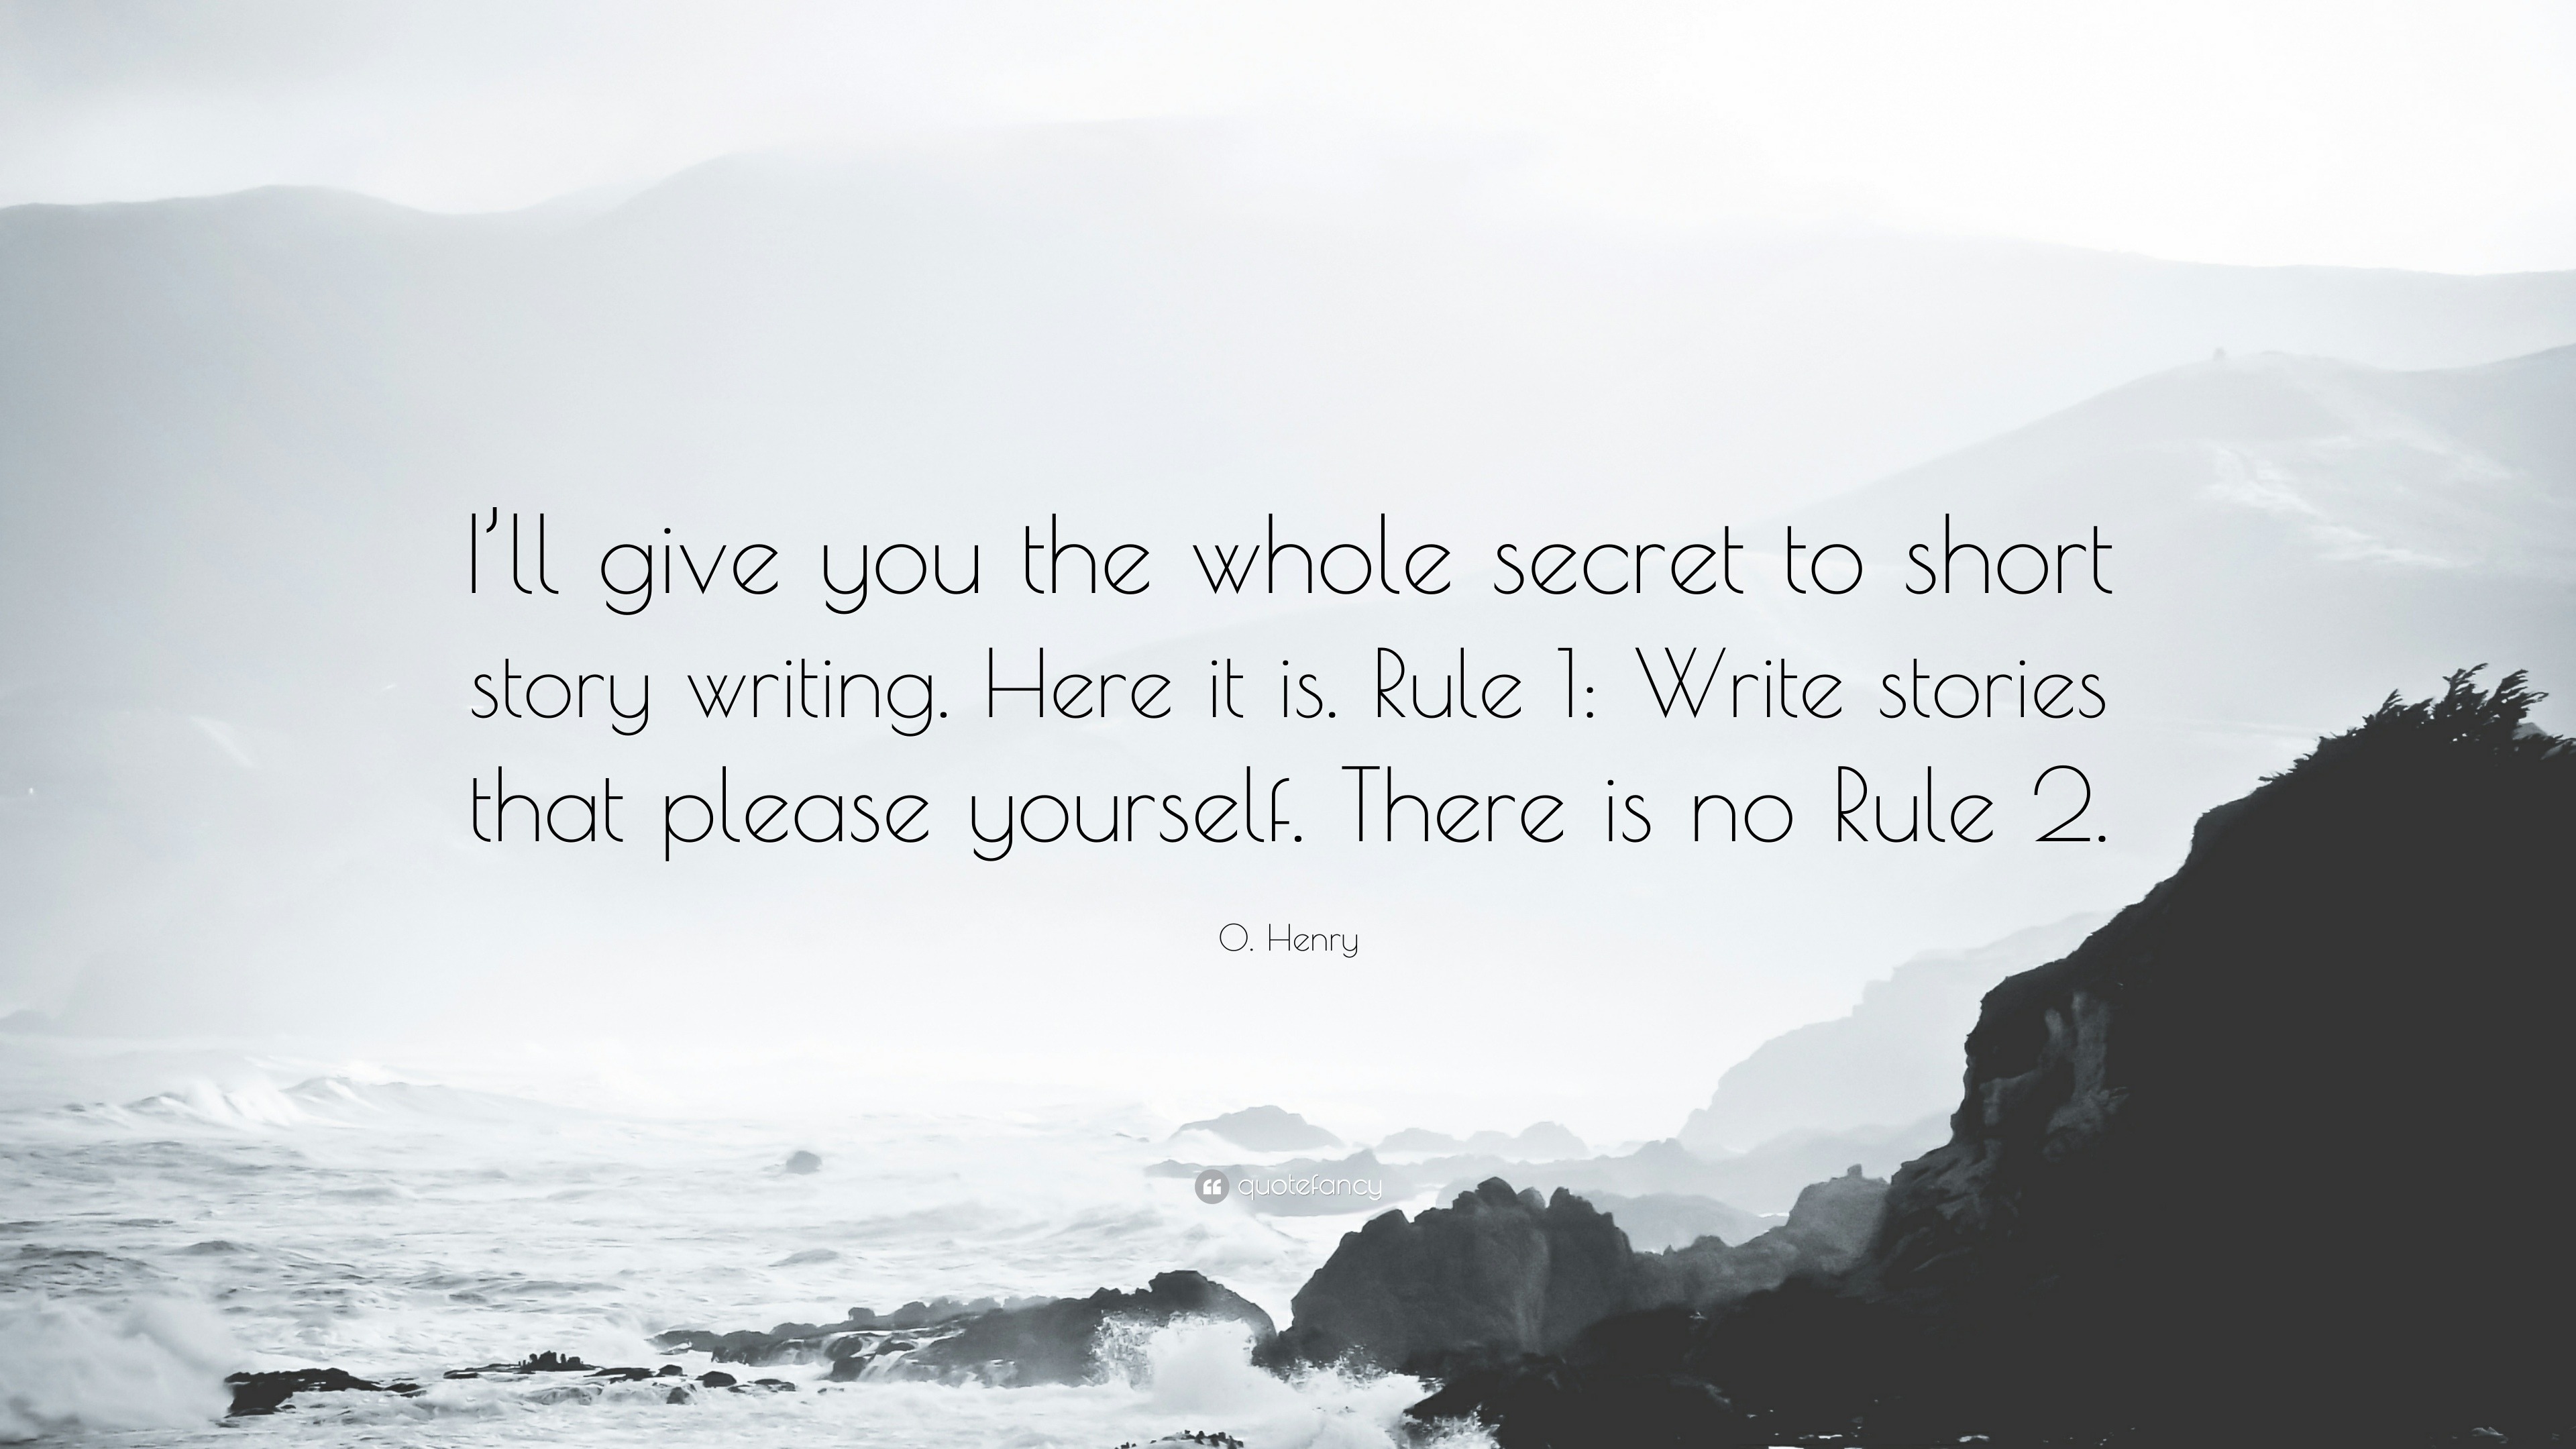 rule 1 of storywriting